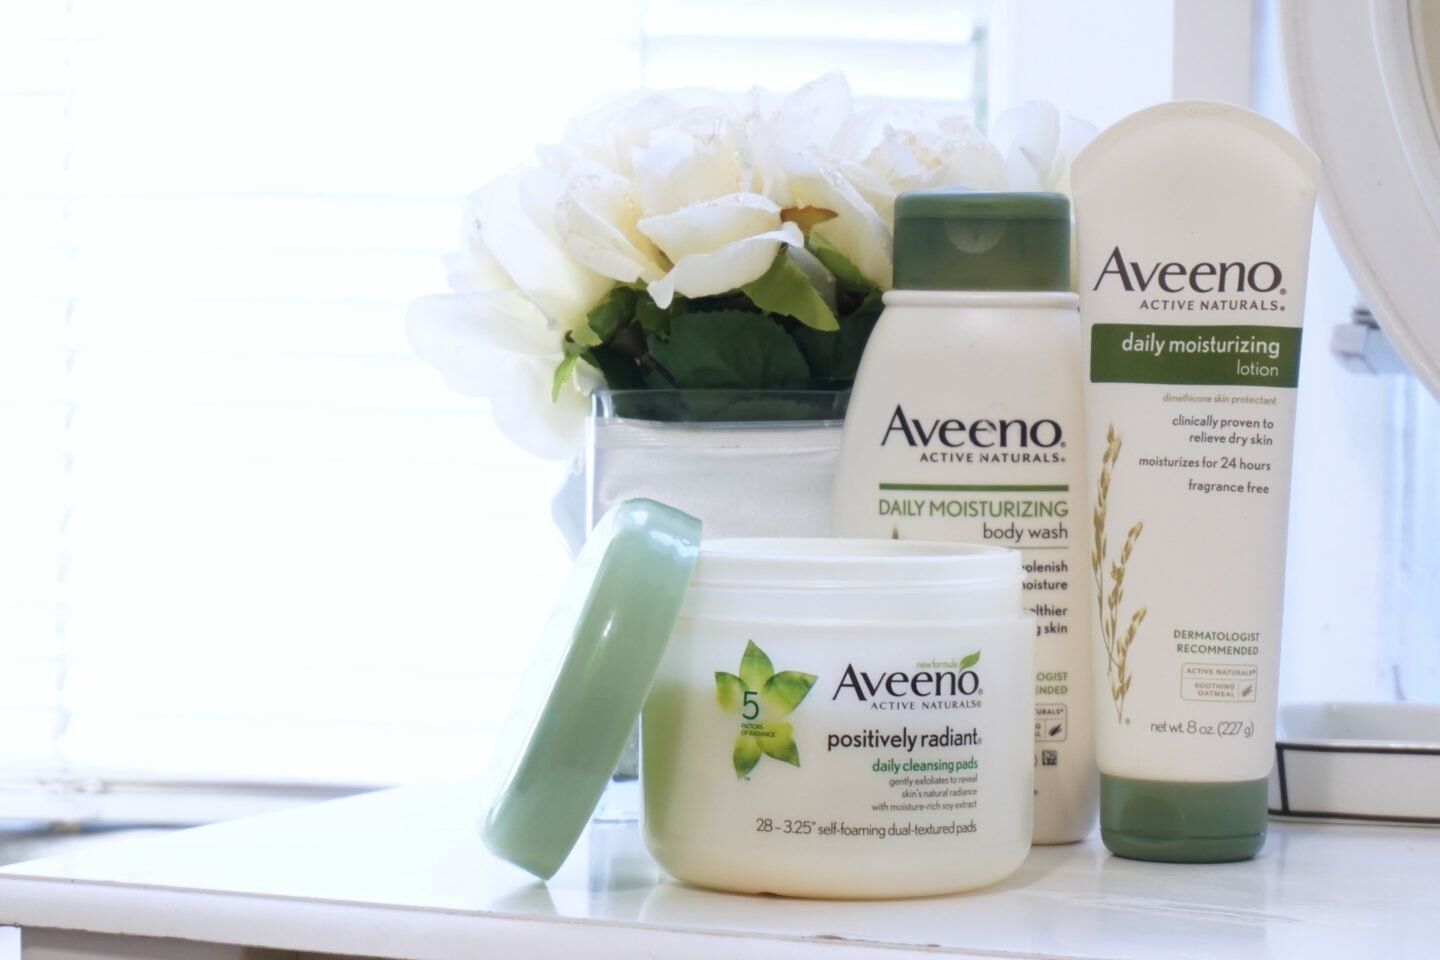 Keeping my Skin Soft with Aveeno